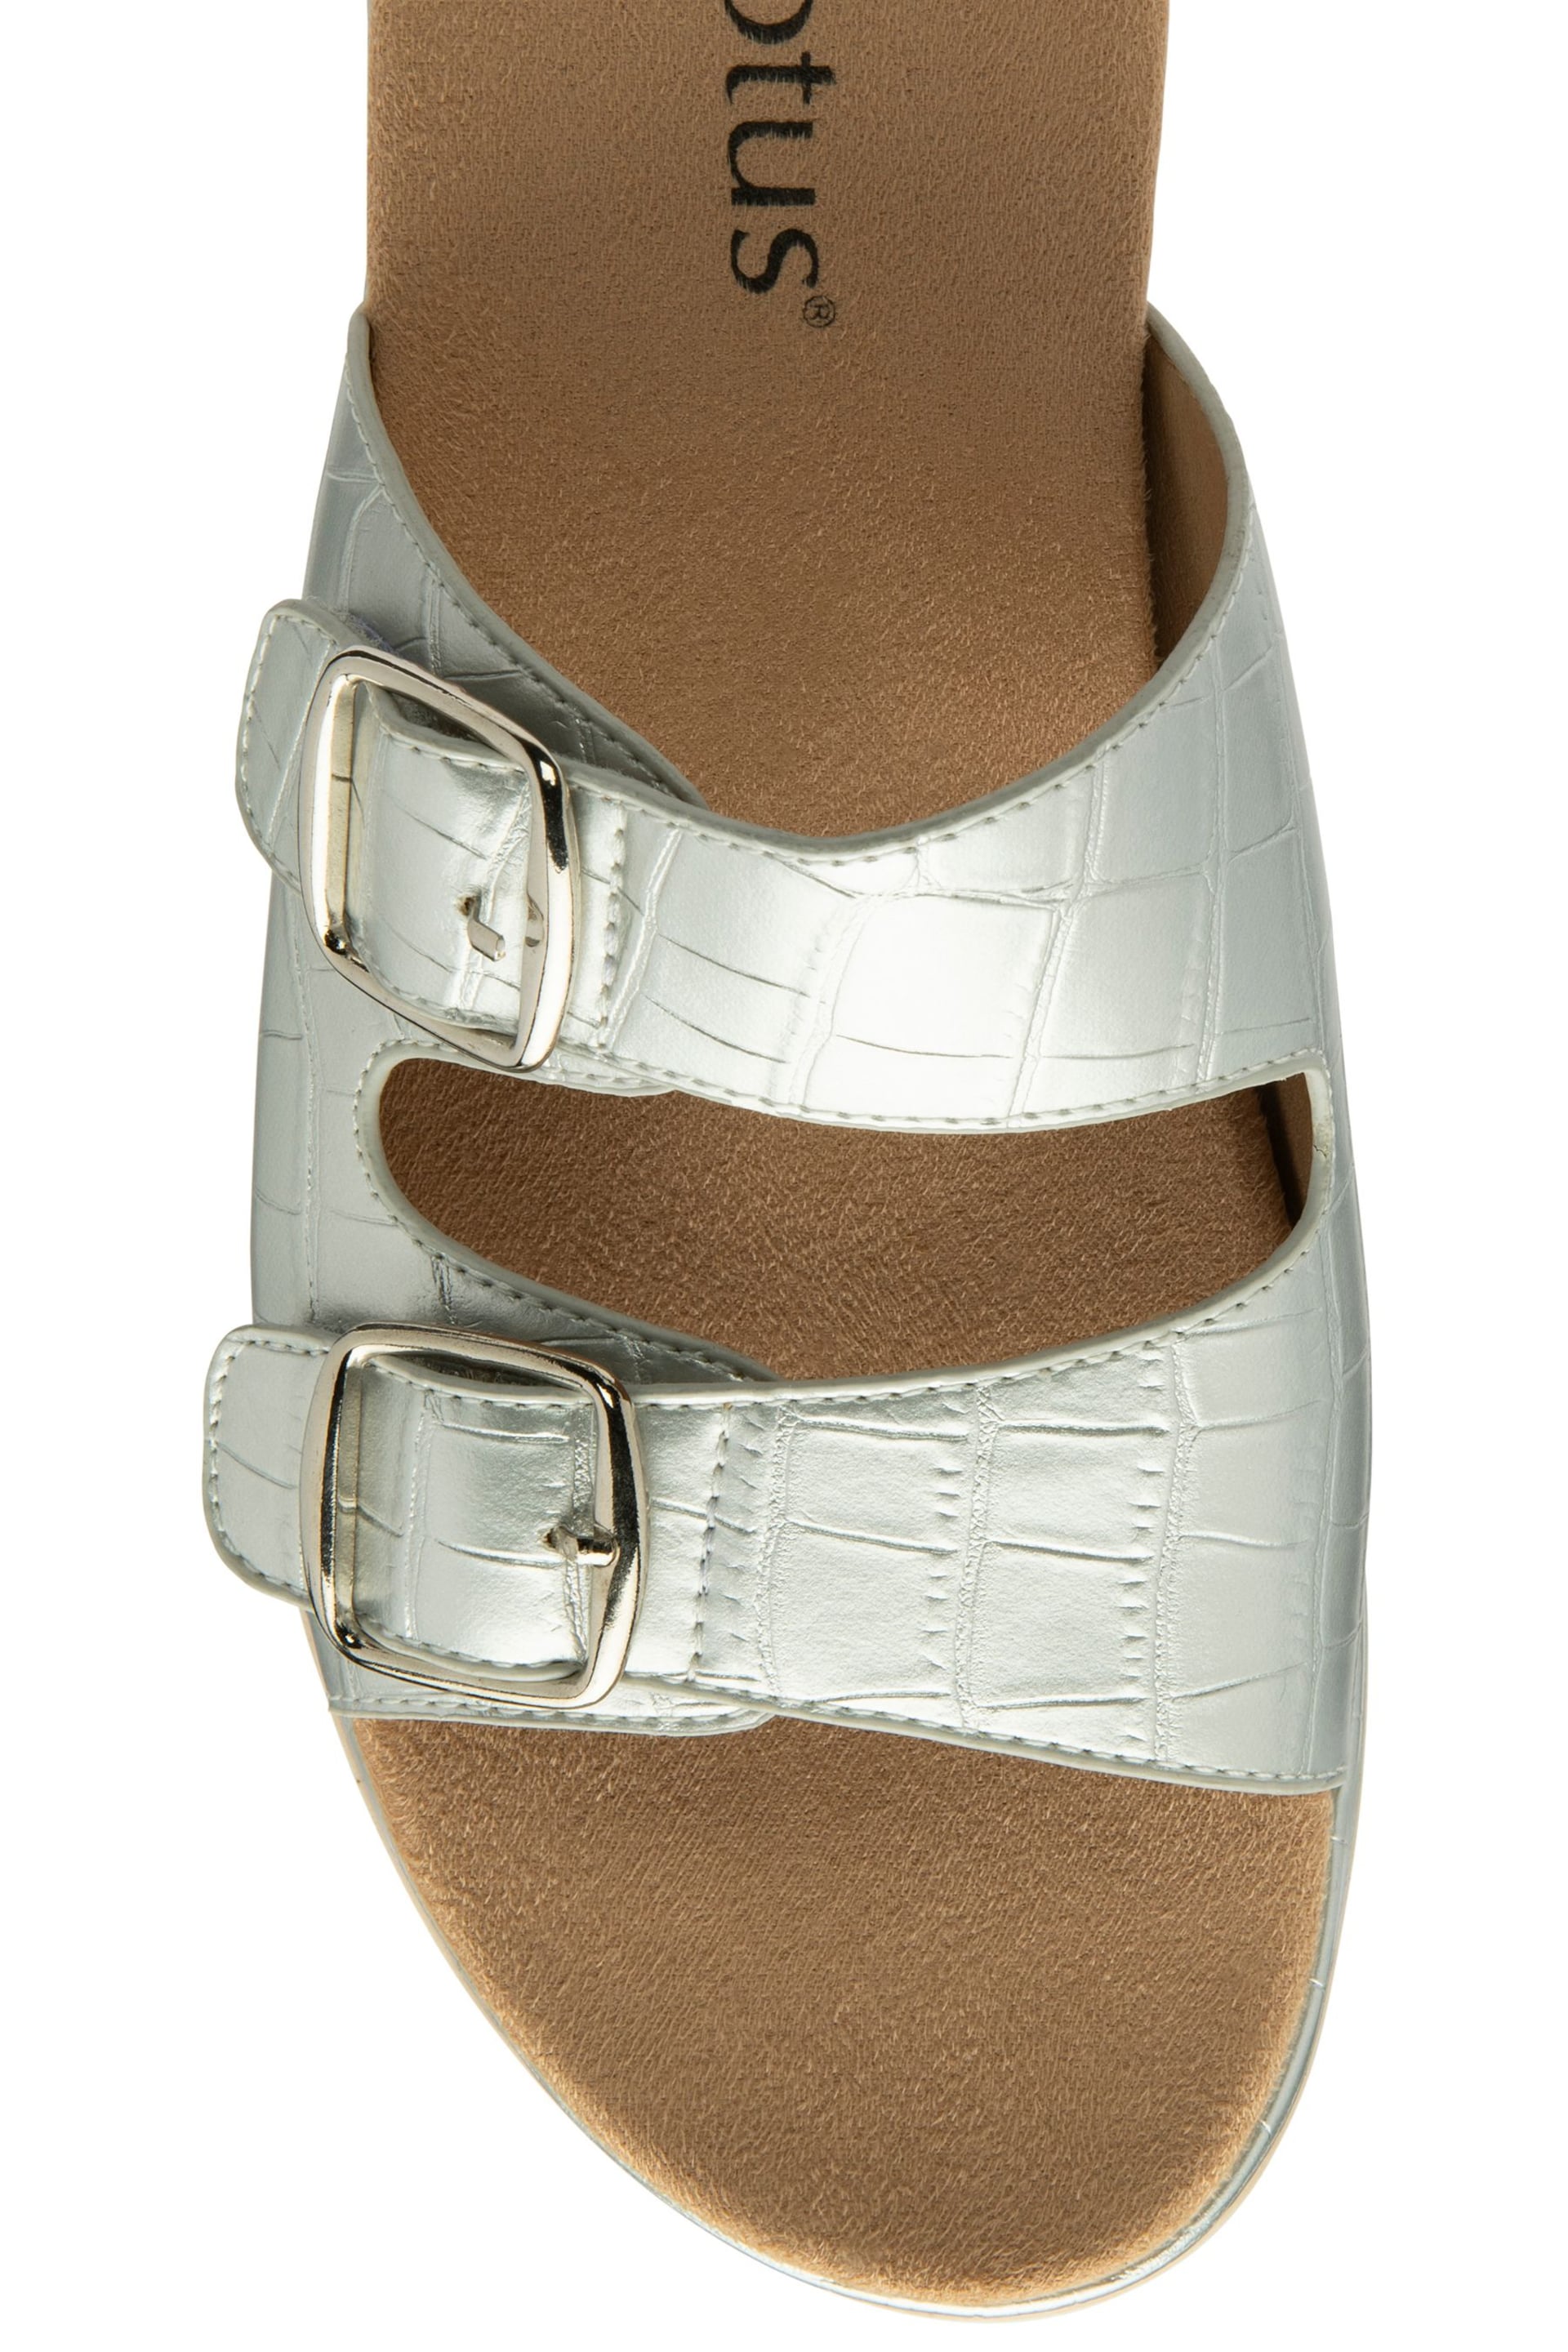 Lotus Silver Flatform Mule Sandals - Image 4 of 4